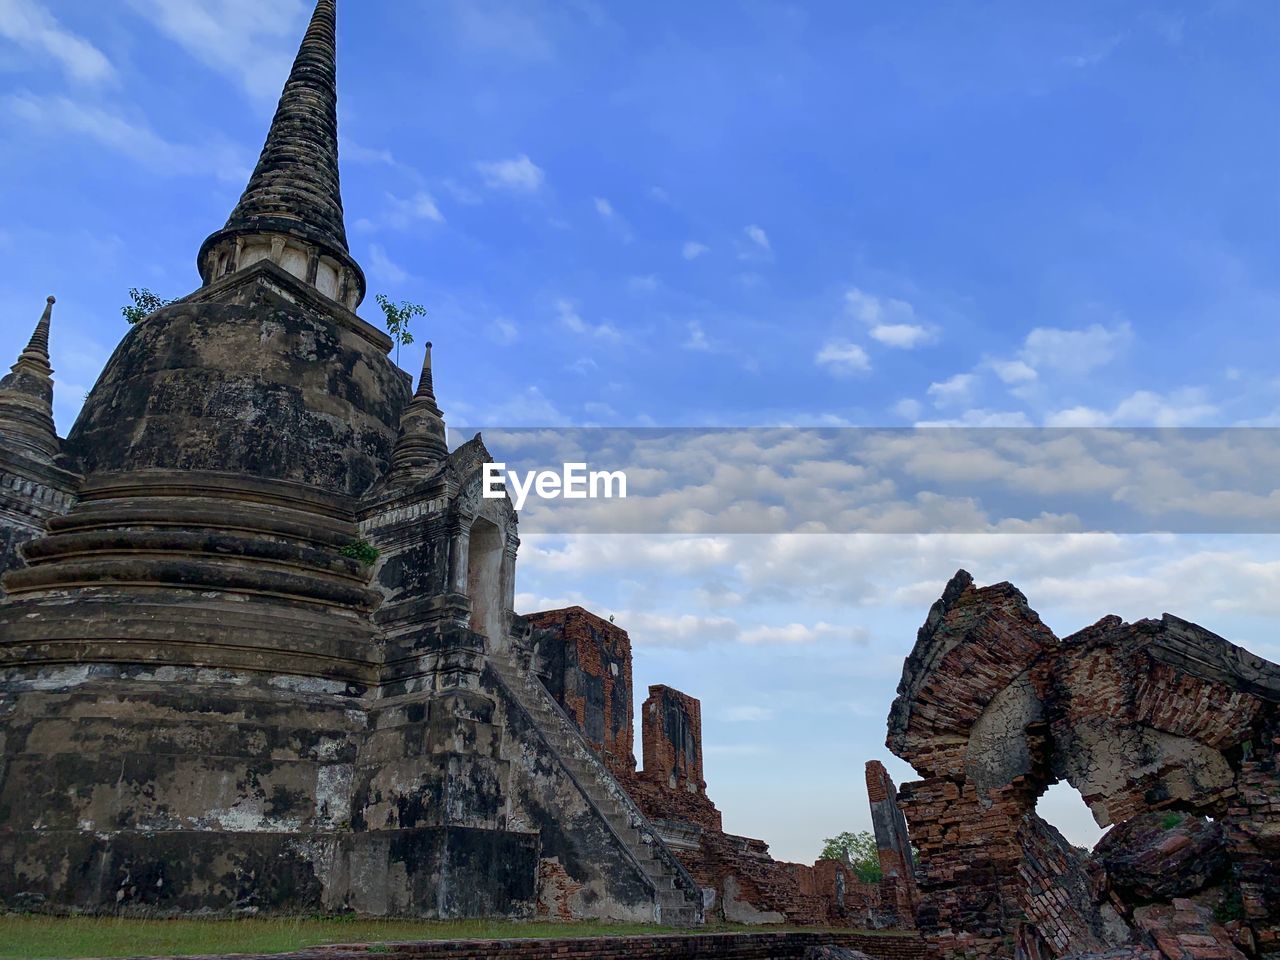 The ayutthaya ruins